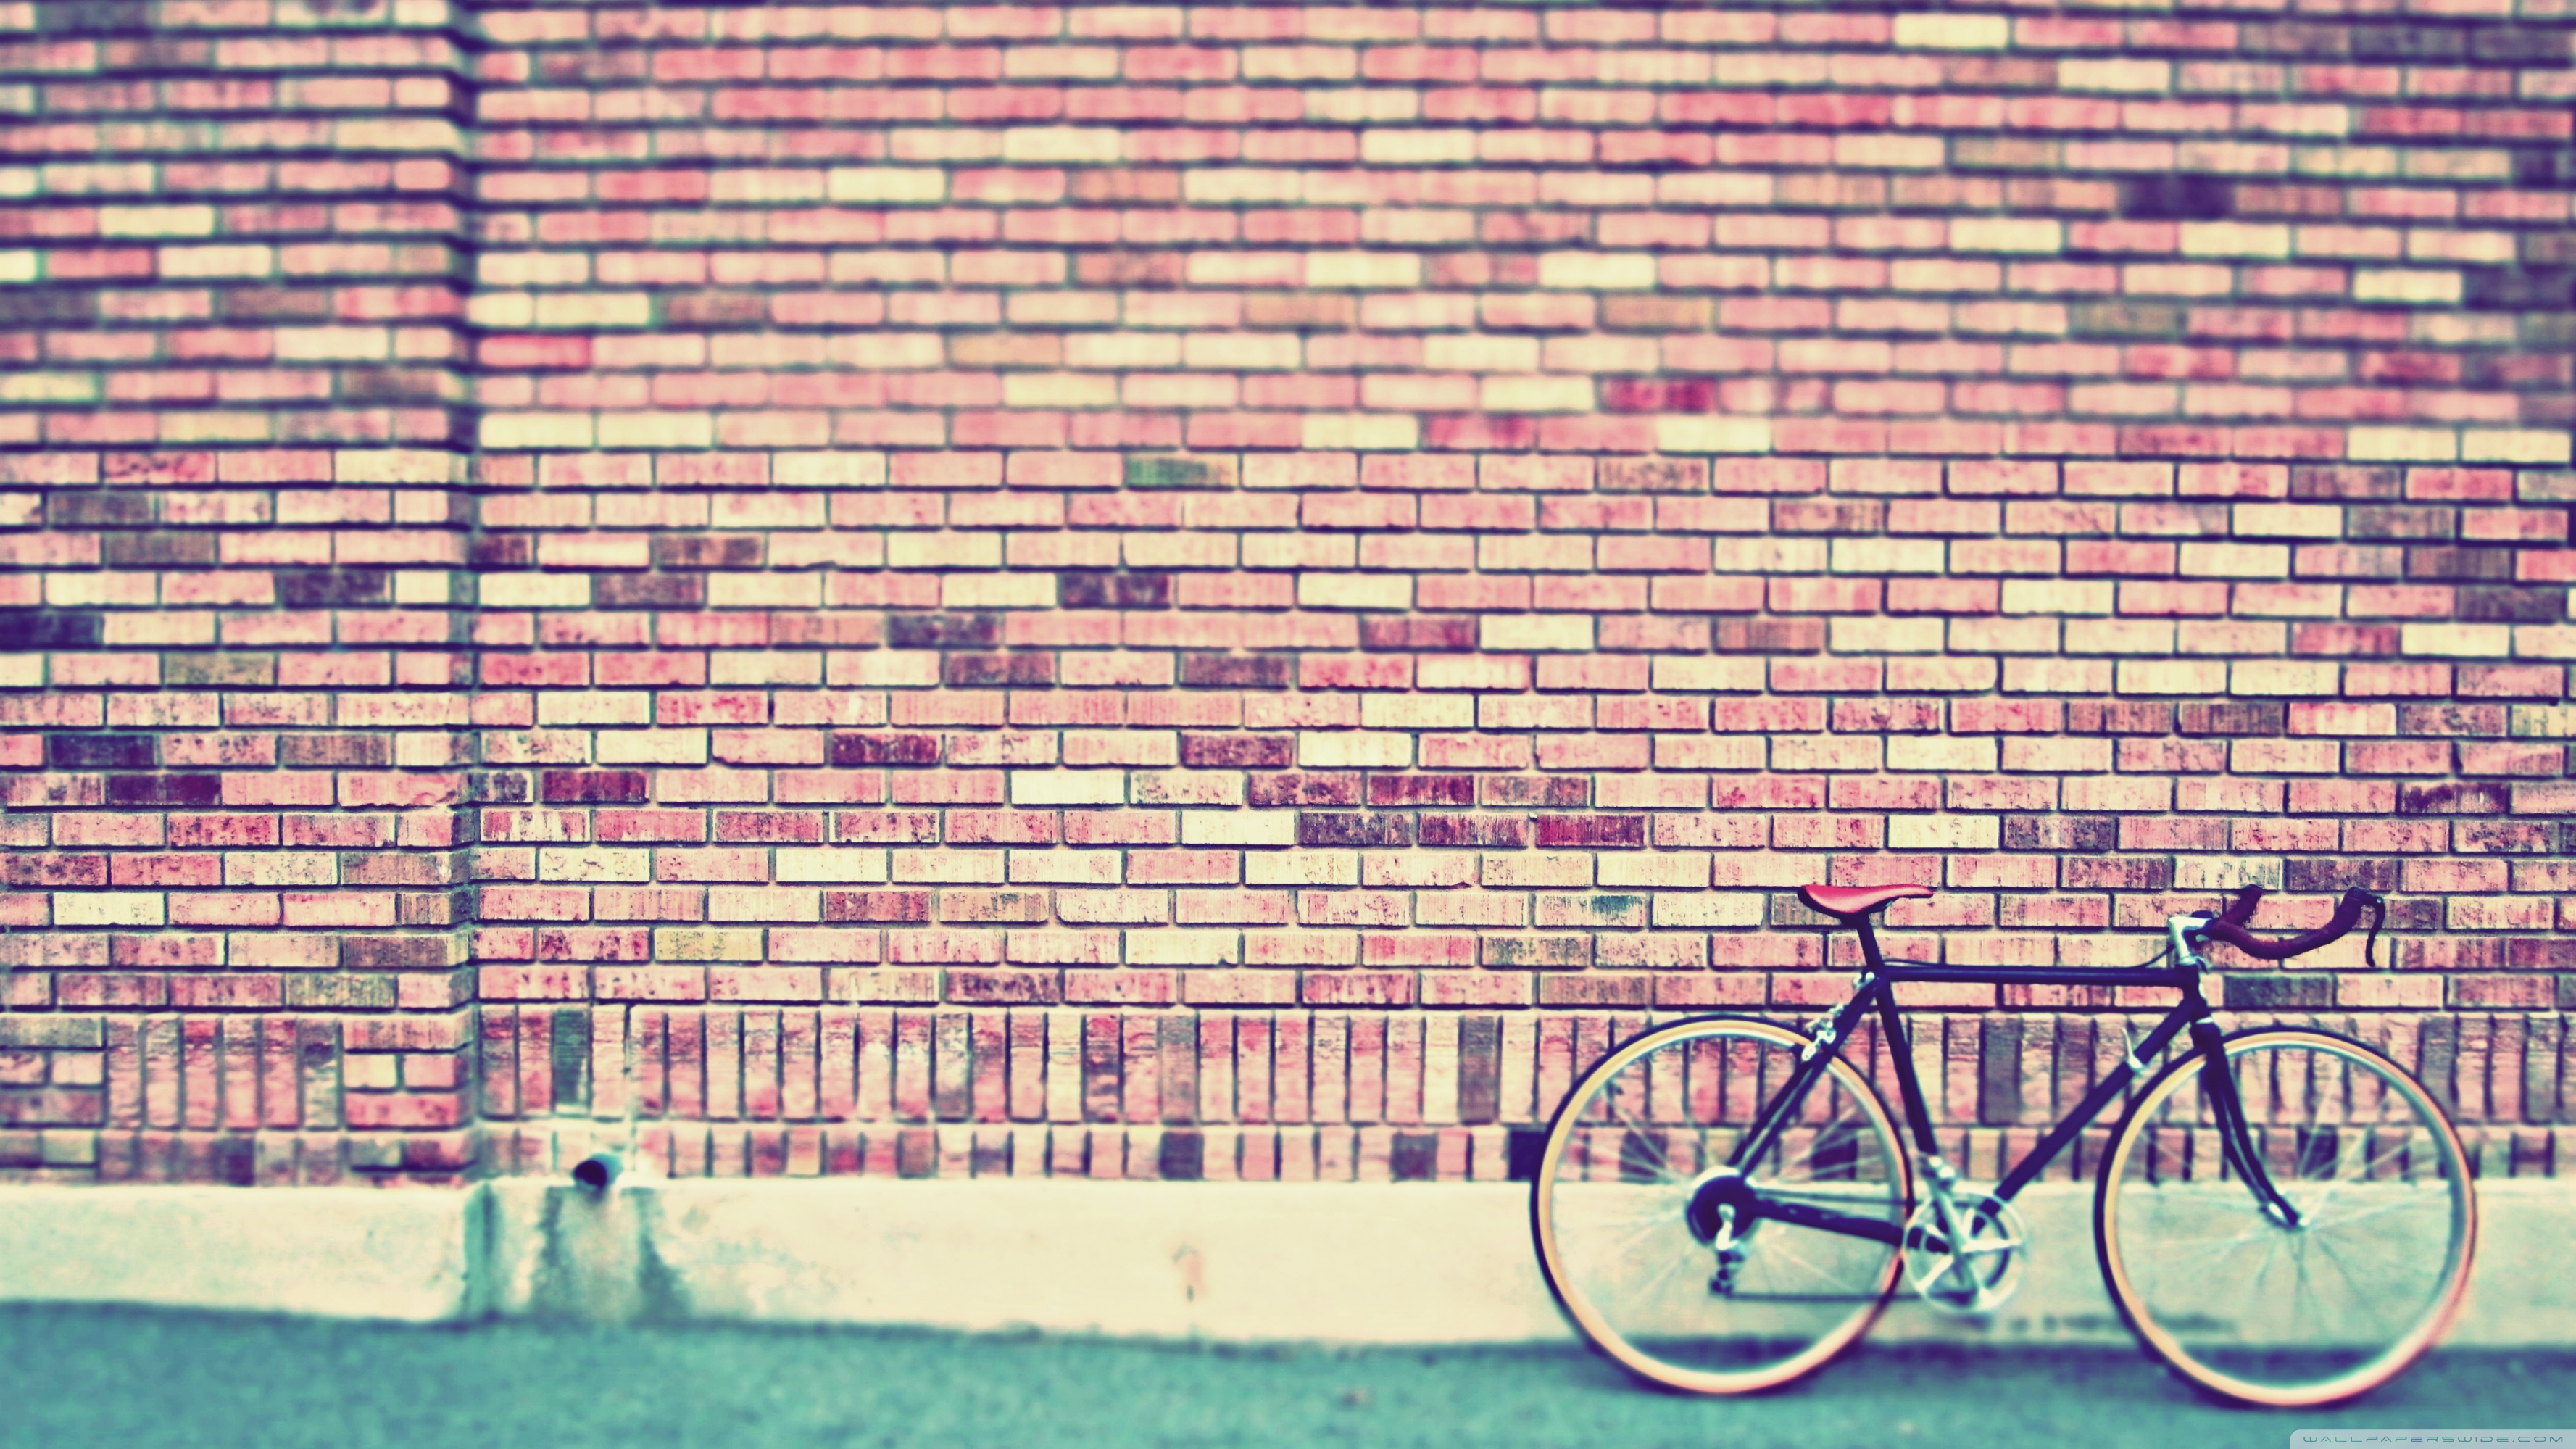 bike wallpapers hd,brick,bicycle,brickwork,wall,bicycle accessory